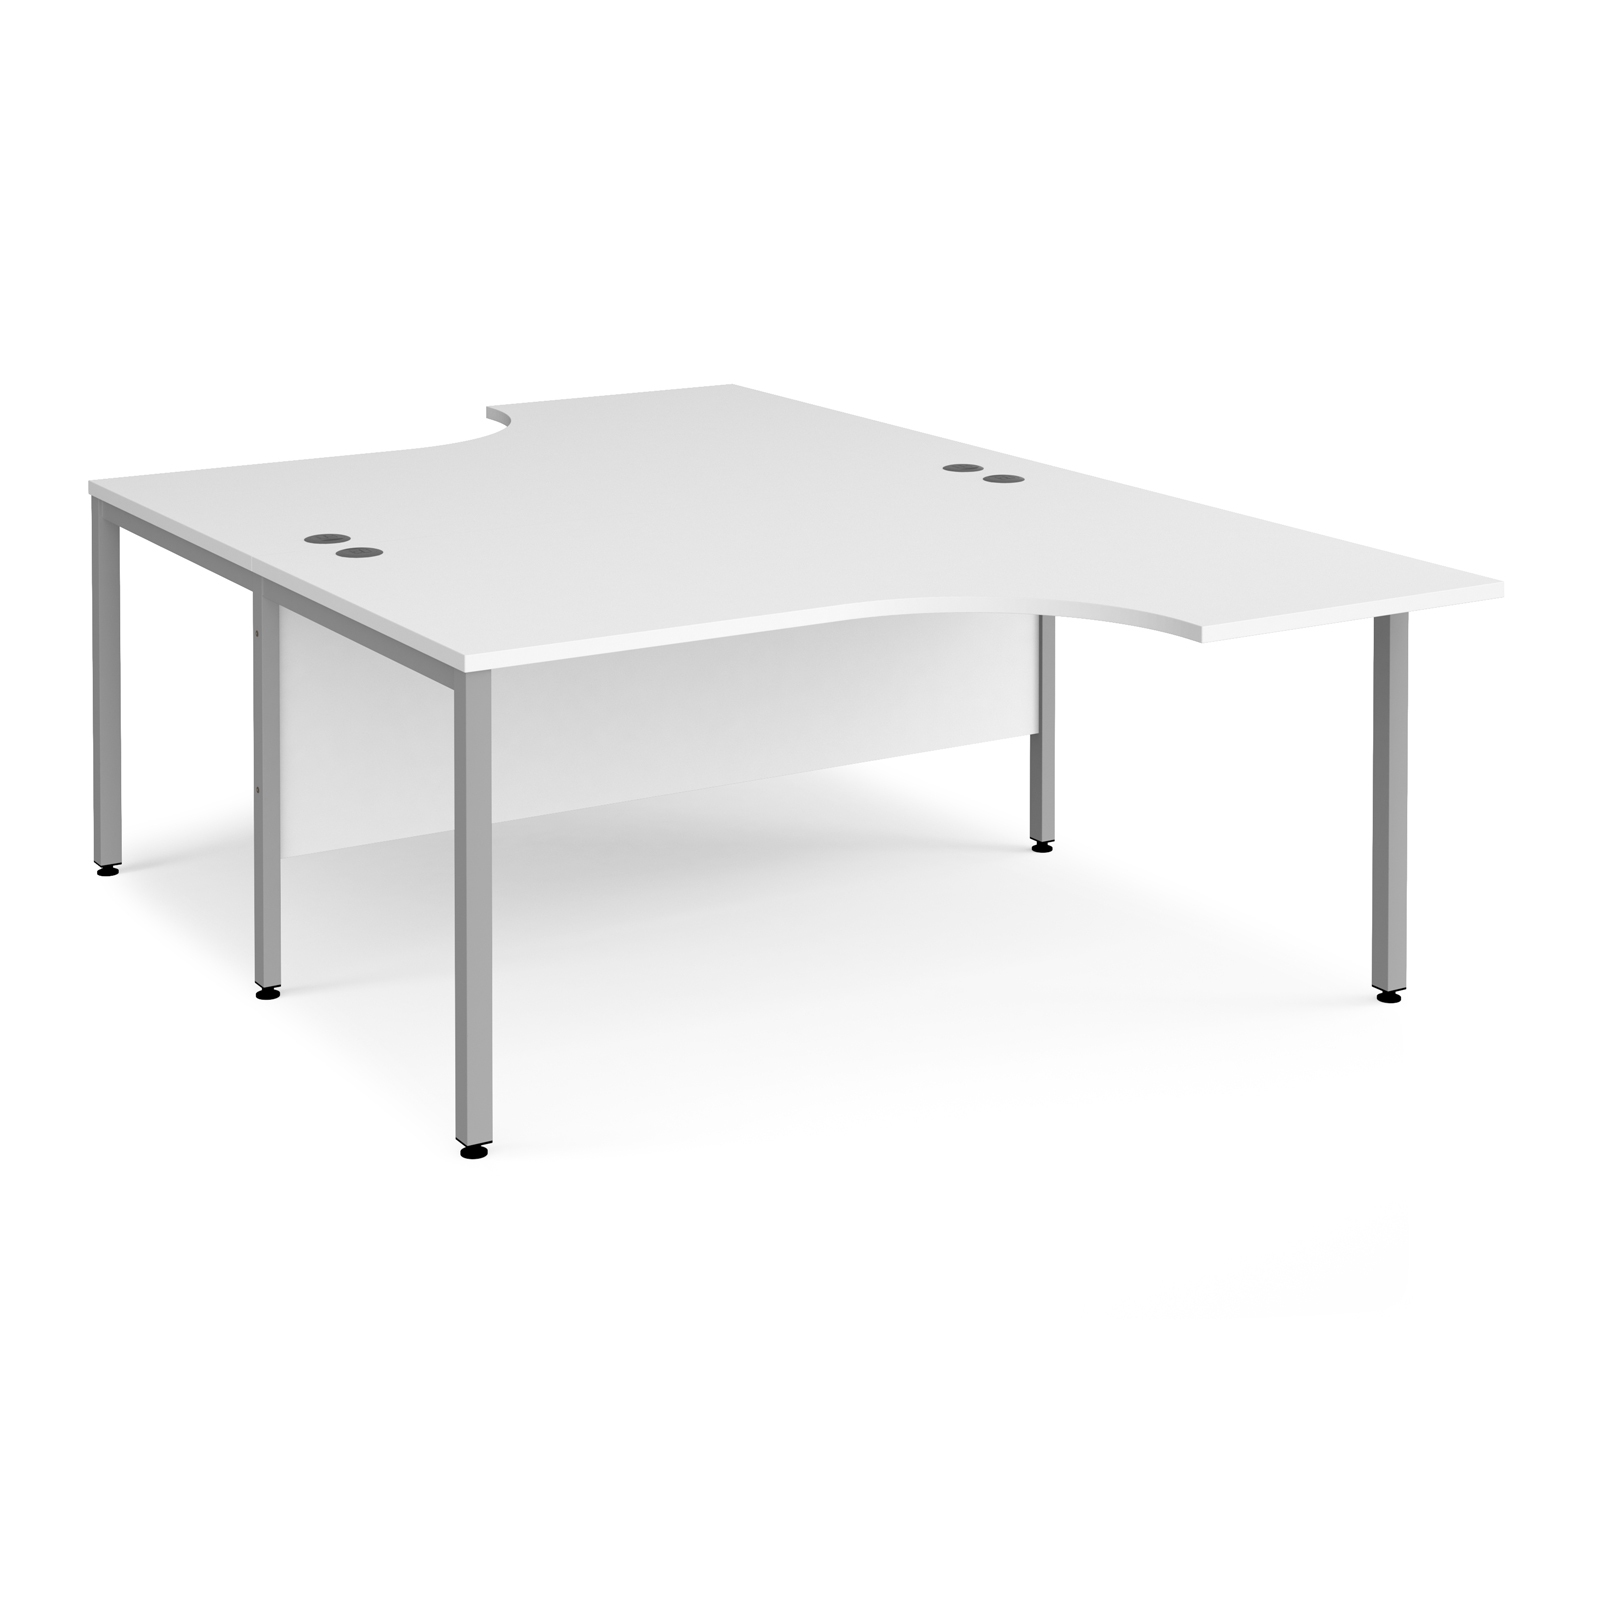 Maestro 25 back to back ergonomic desks 1600mm deep - silver bench leg frame, white top